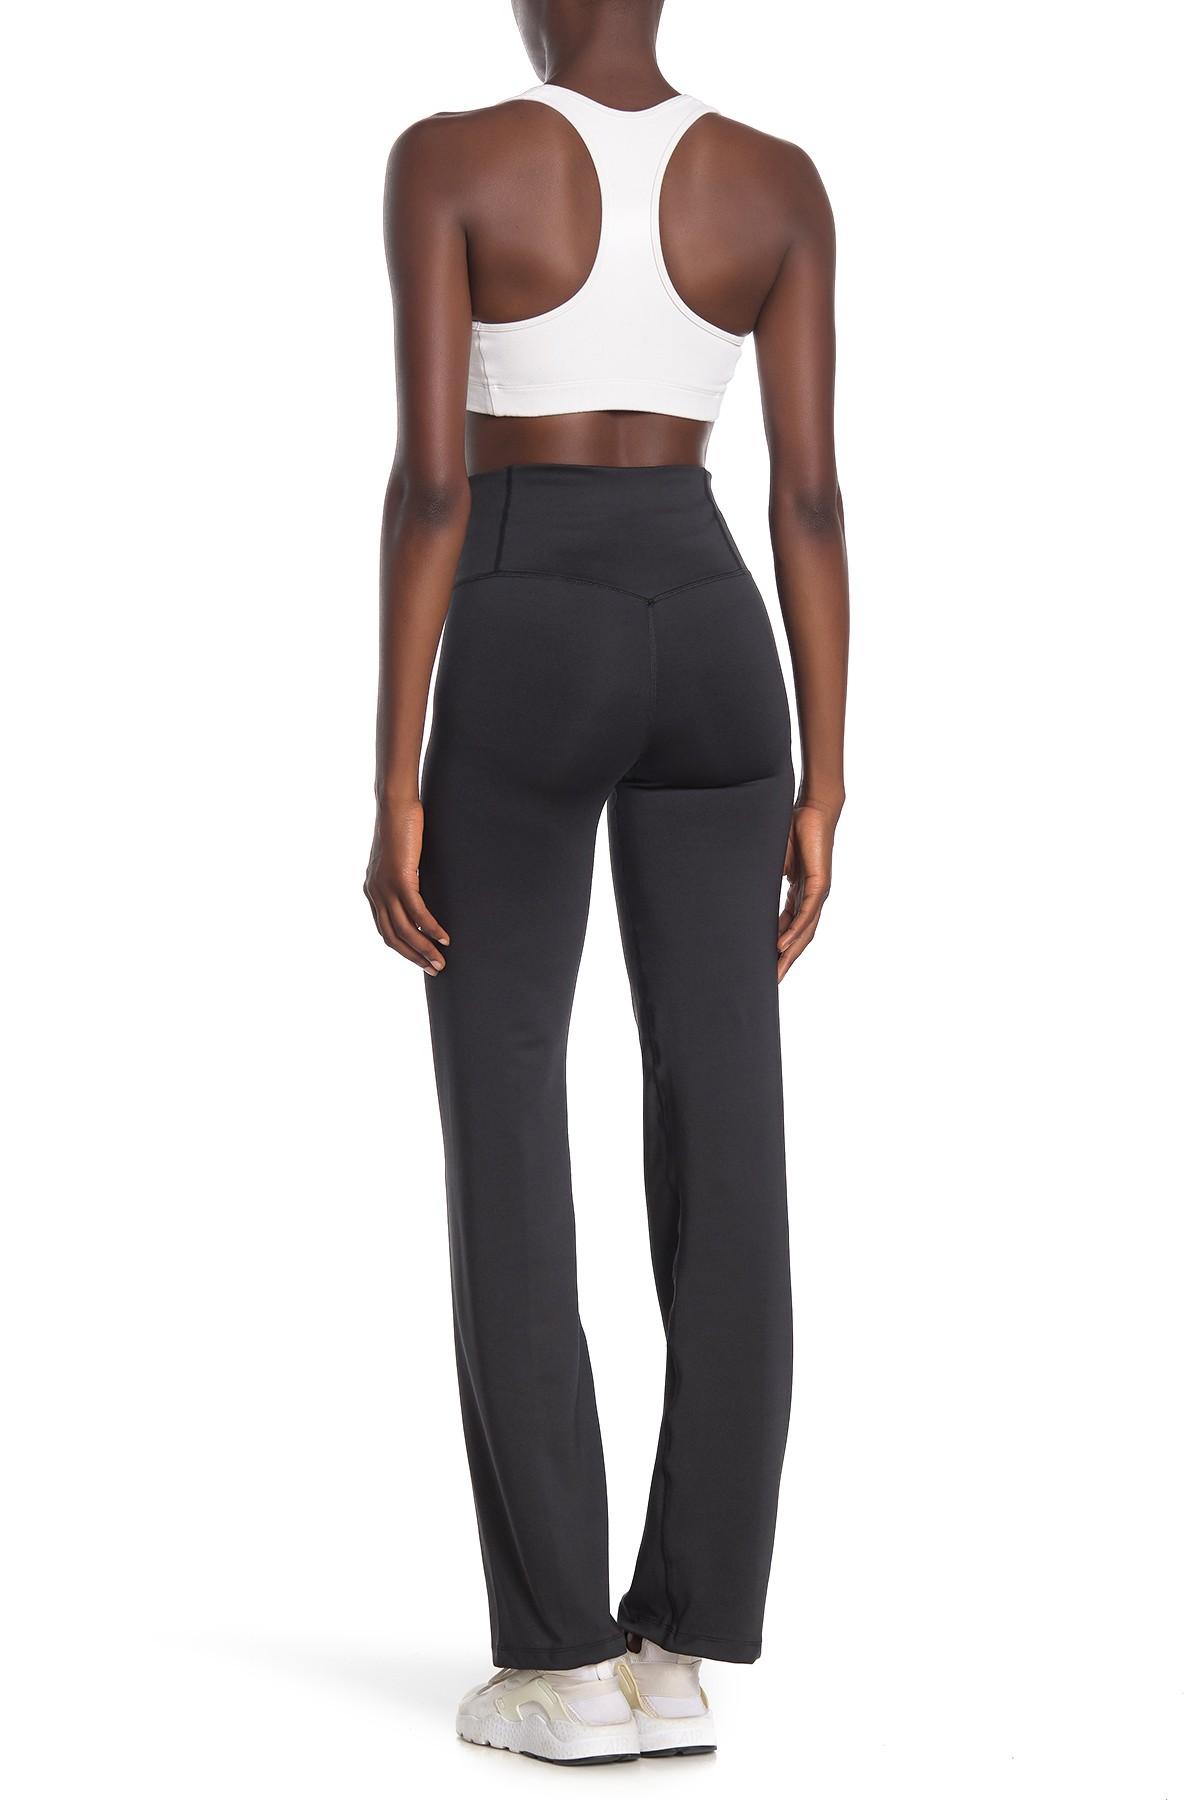 Nike Synthetic Power Yoga Training Trousers in Black/Black (Black) | Lyst